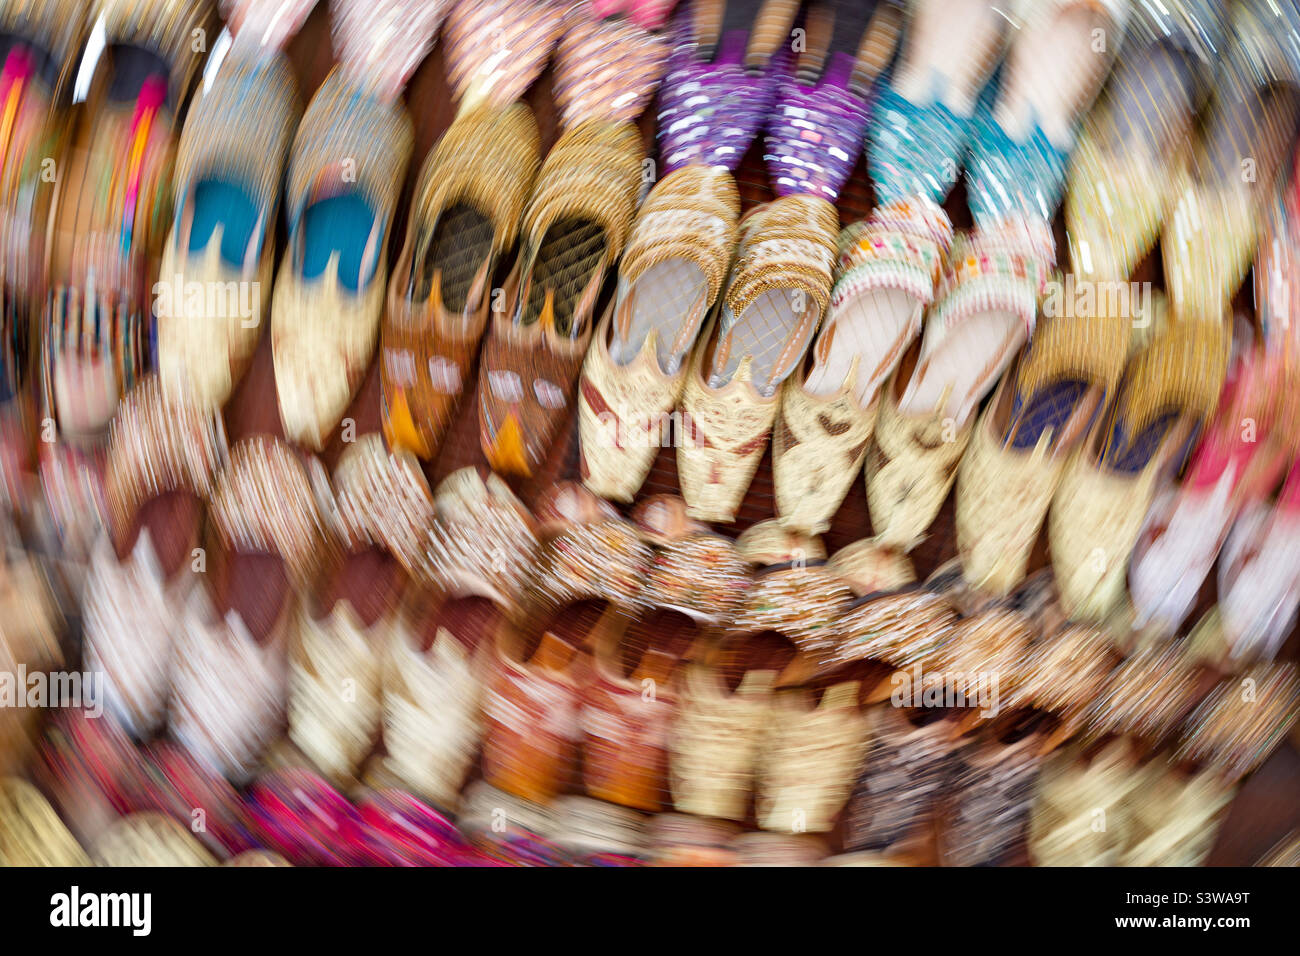 Arabic style shoes at Dubai market, creative icm Stock Photo